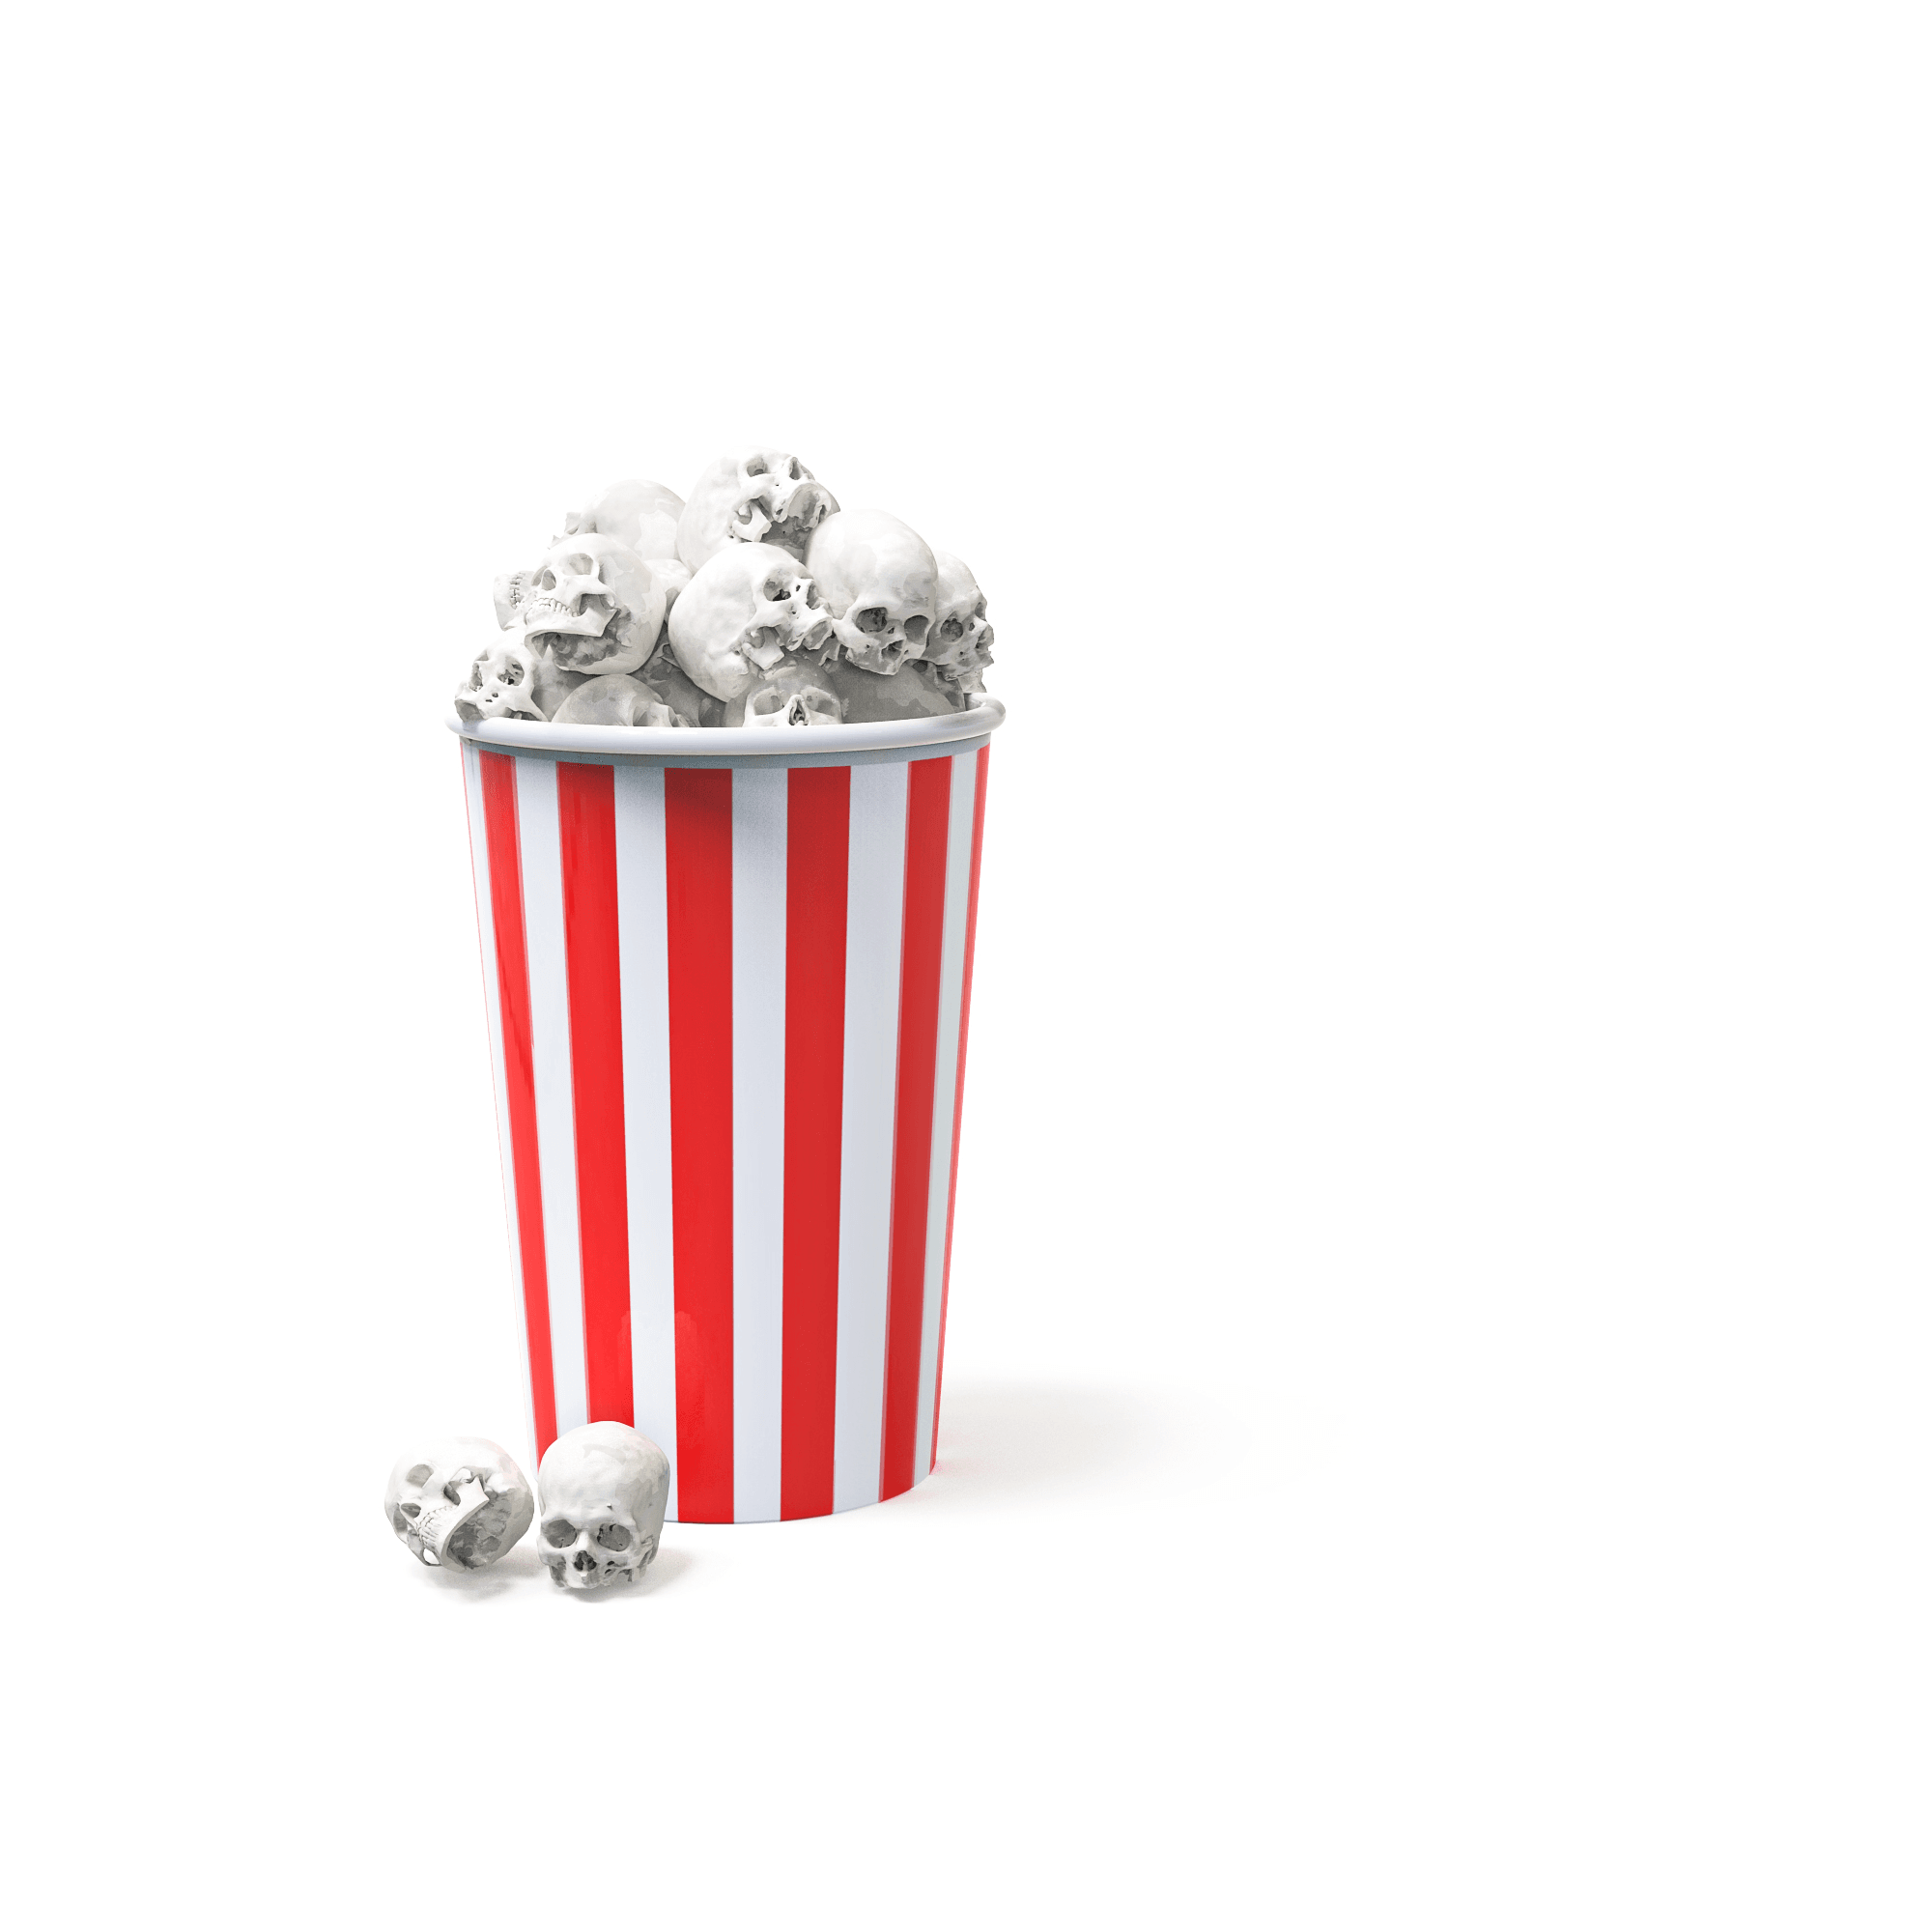 "popcorn.37" by Shaul cohen #018